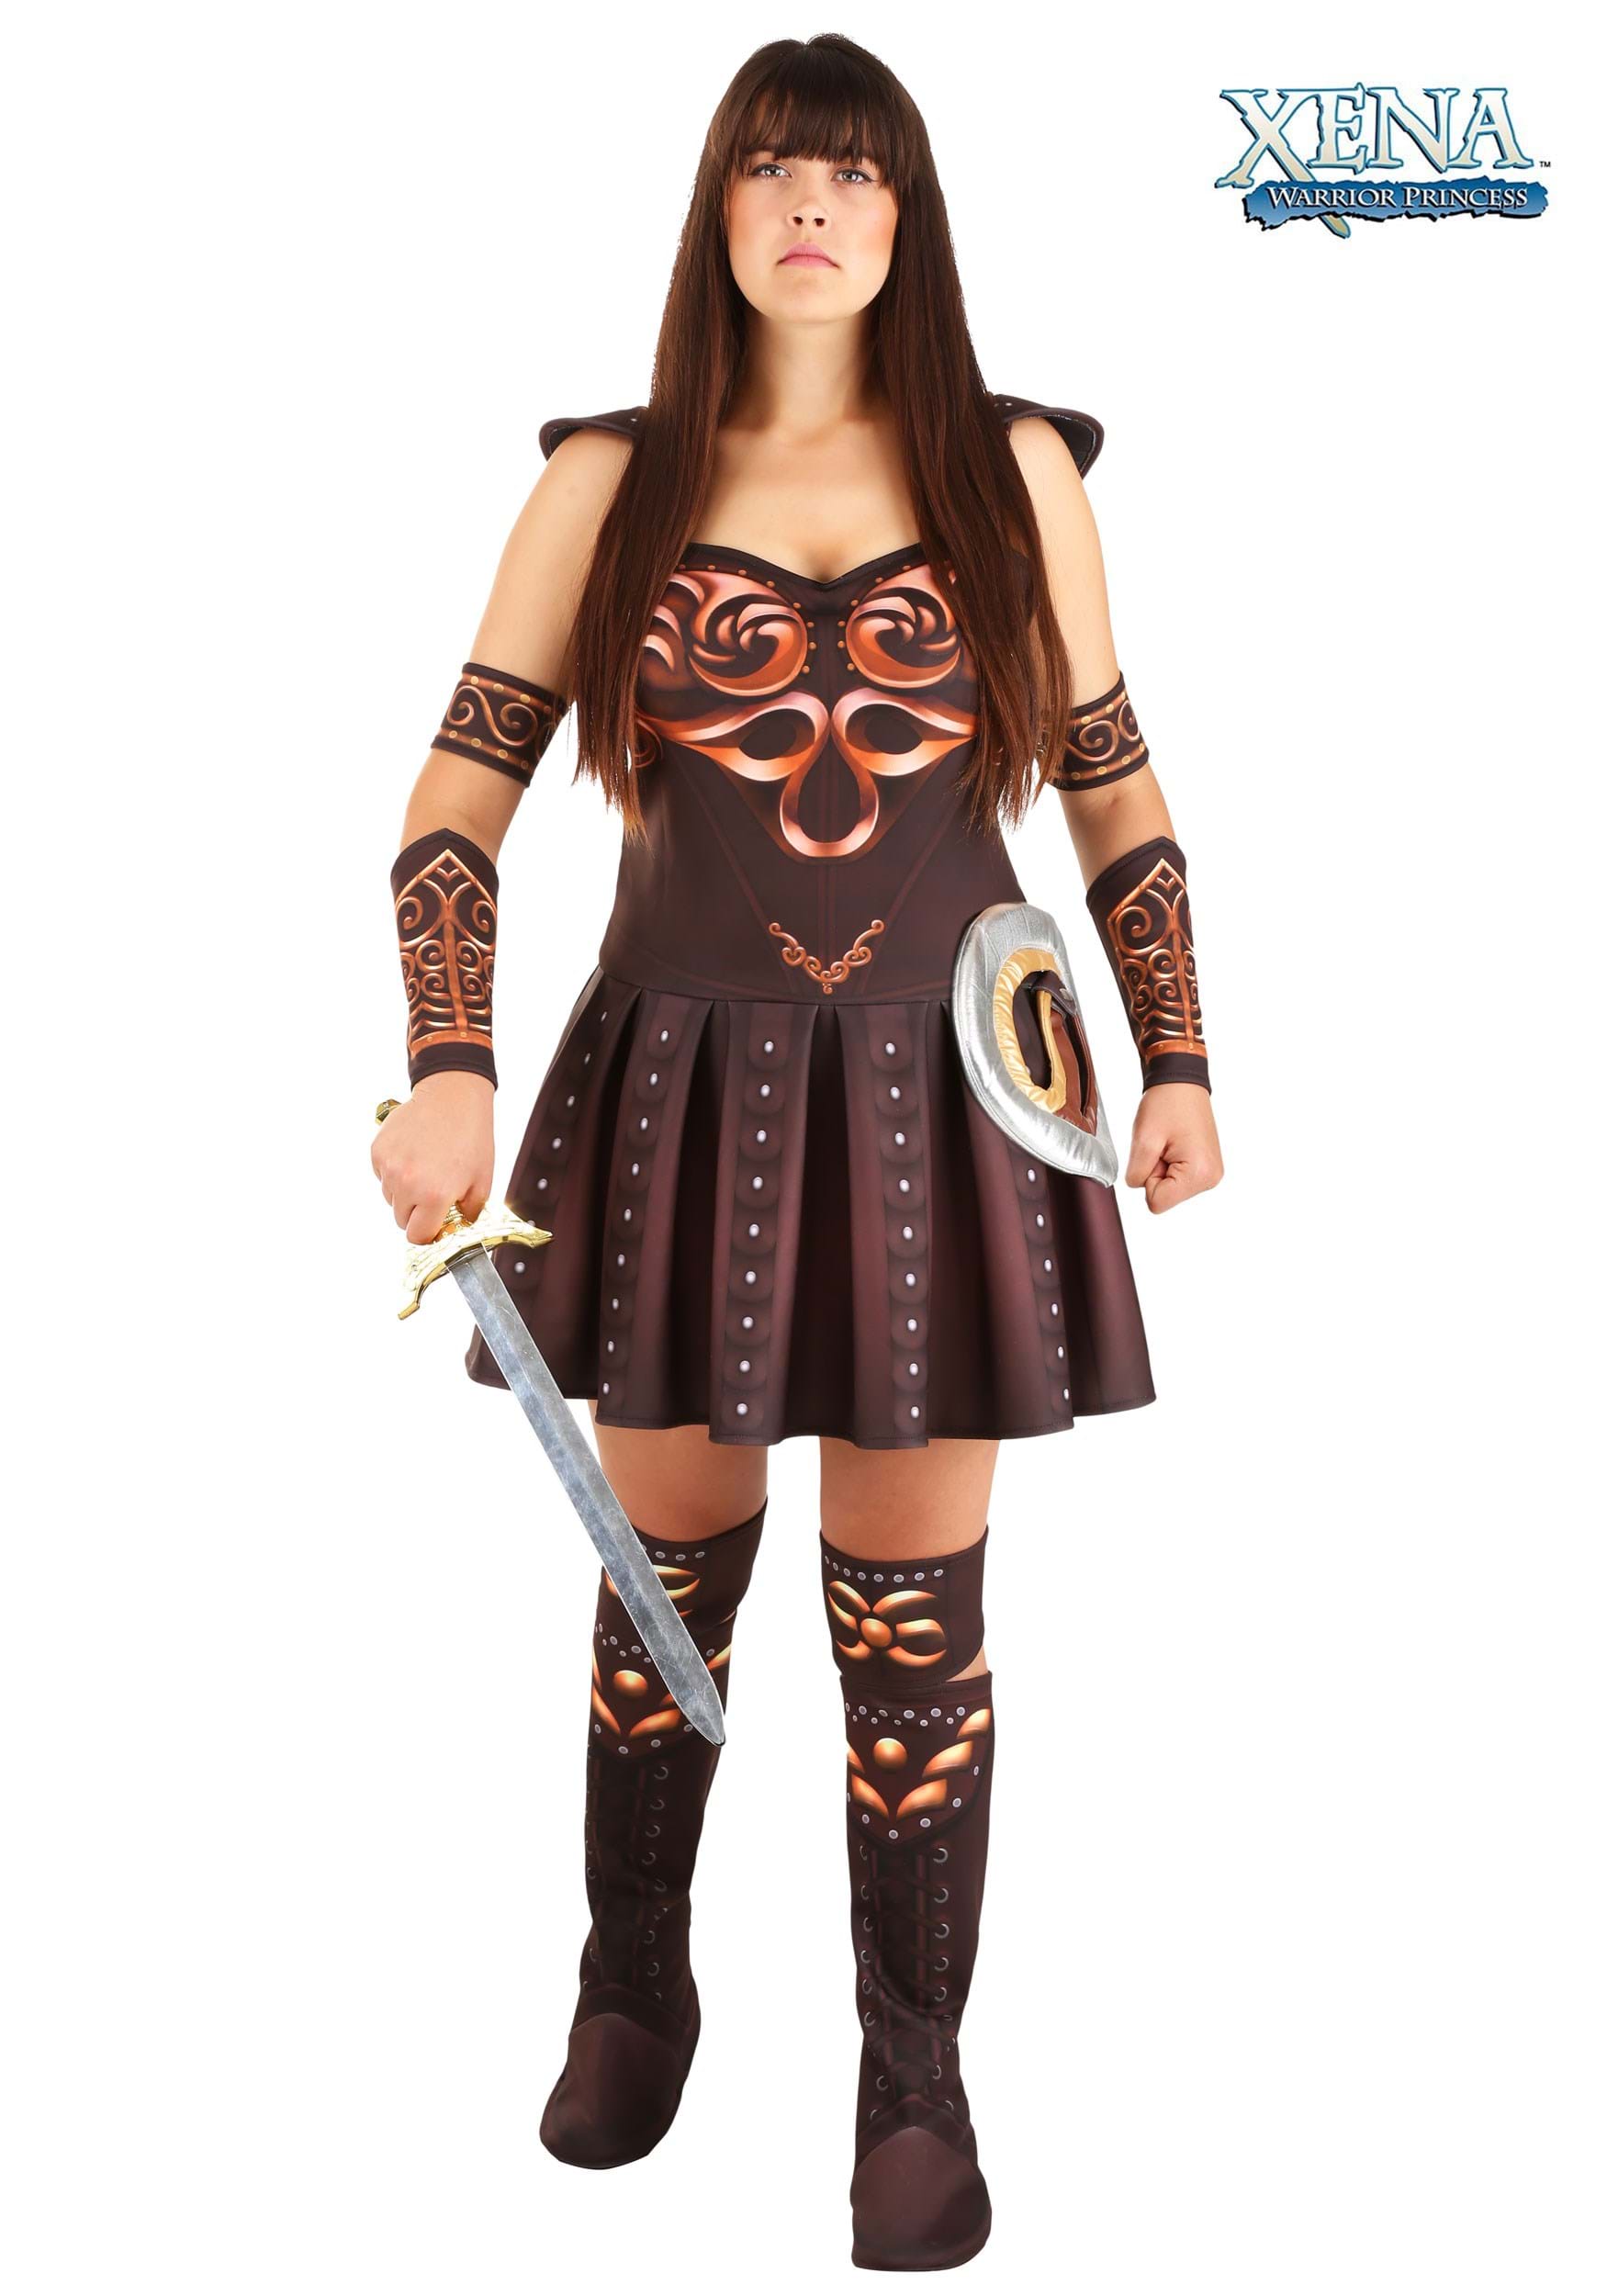 Women’s Plus Size Xena Warrior Princess Costume